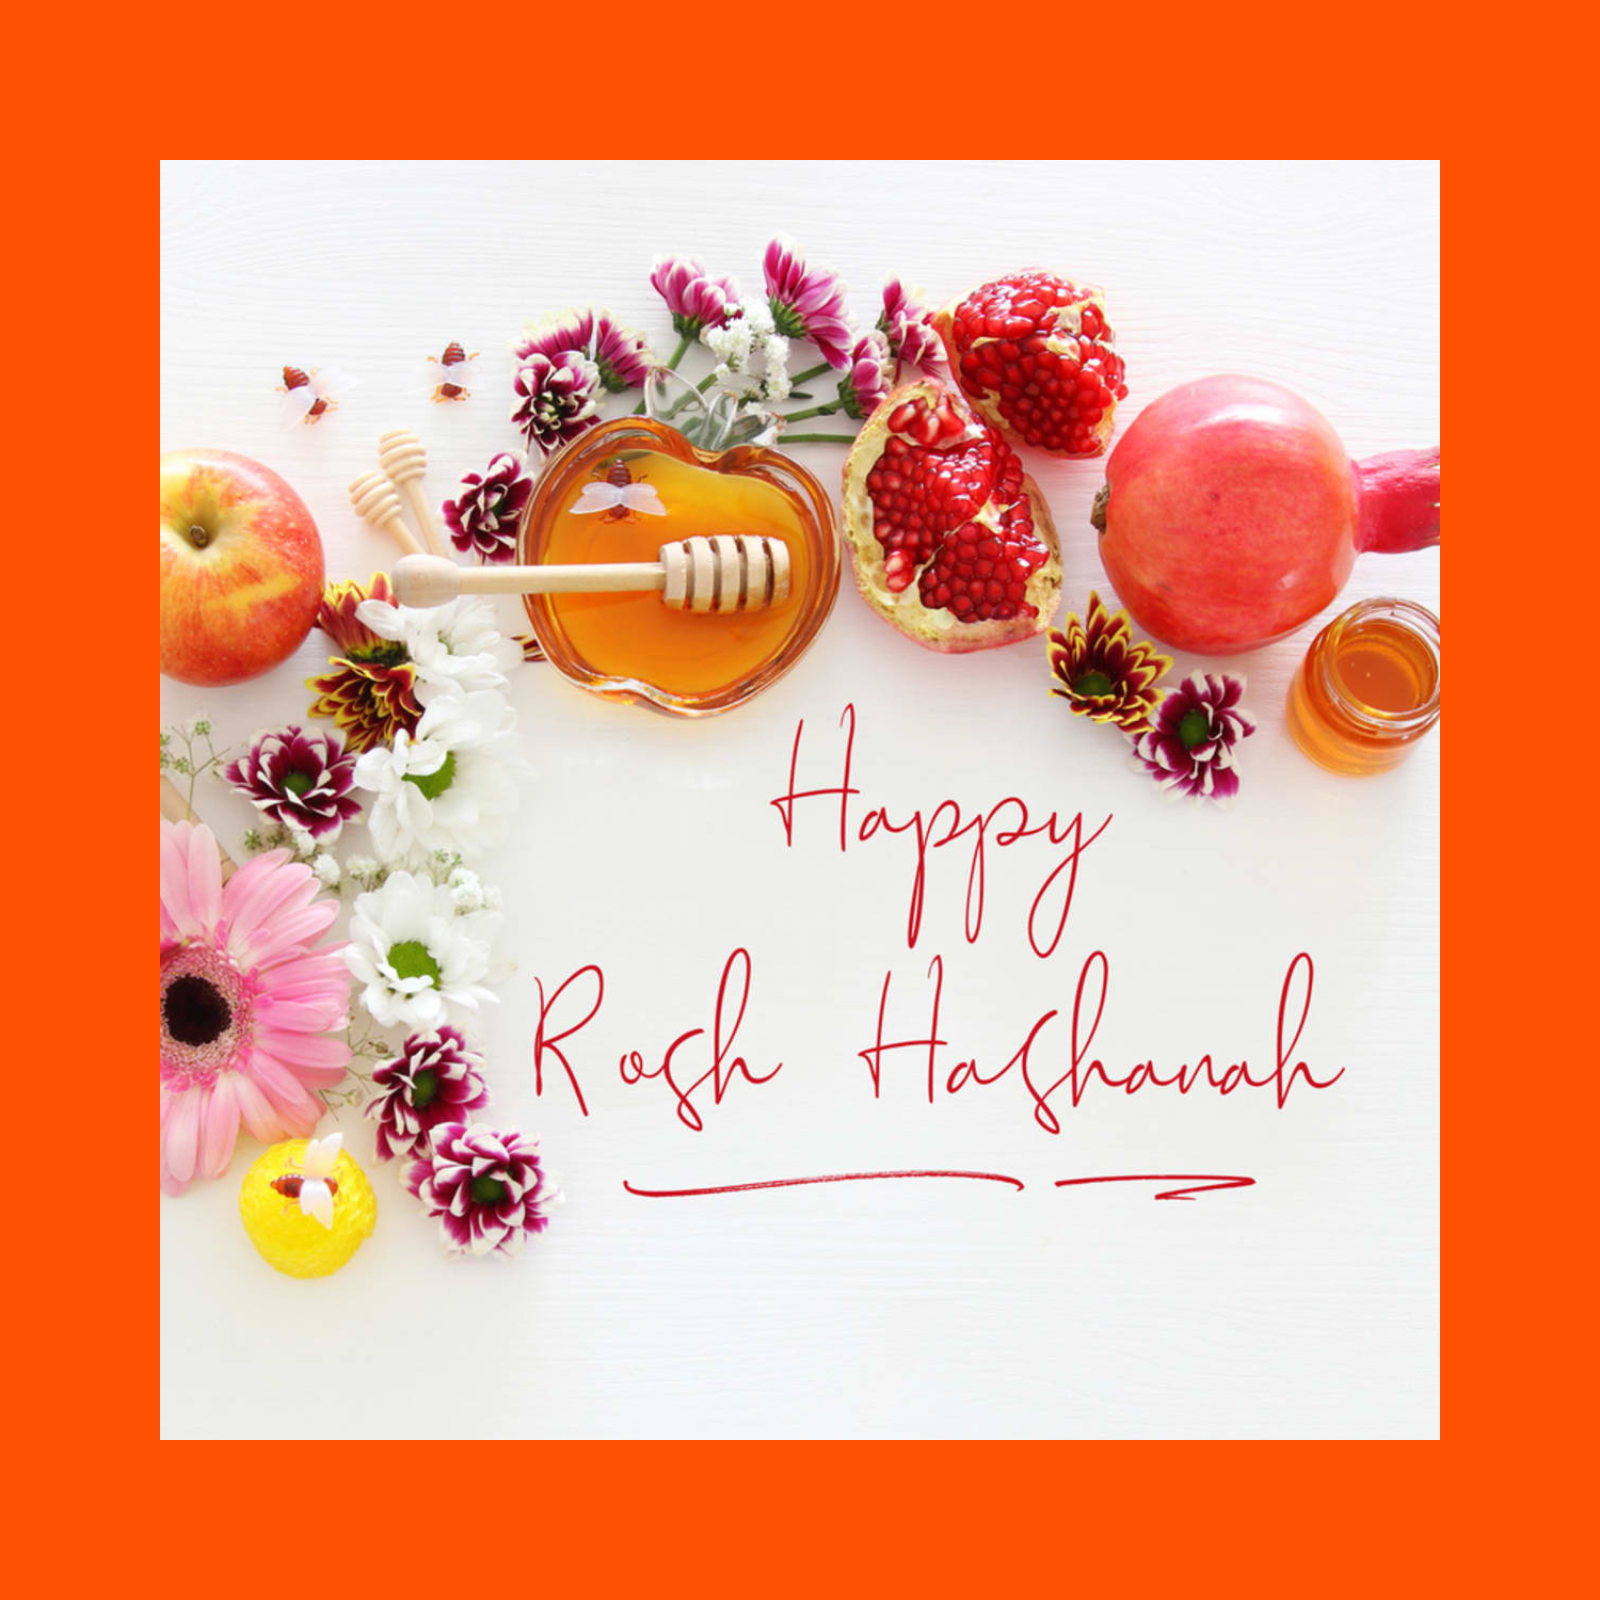 RoshHashanah | Blessings |  RoshHashanah2023 | JewishNewYear | Renewal |  MeaningfulGreetings | Traditions | ShanahTovah |  HighHolyDays | JewishCulture | SpiritualRenewal | SpiritualReflection | RoshHashanahGreetings | HolidayCelebration | FamilyGatherings |